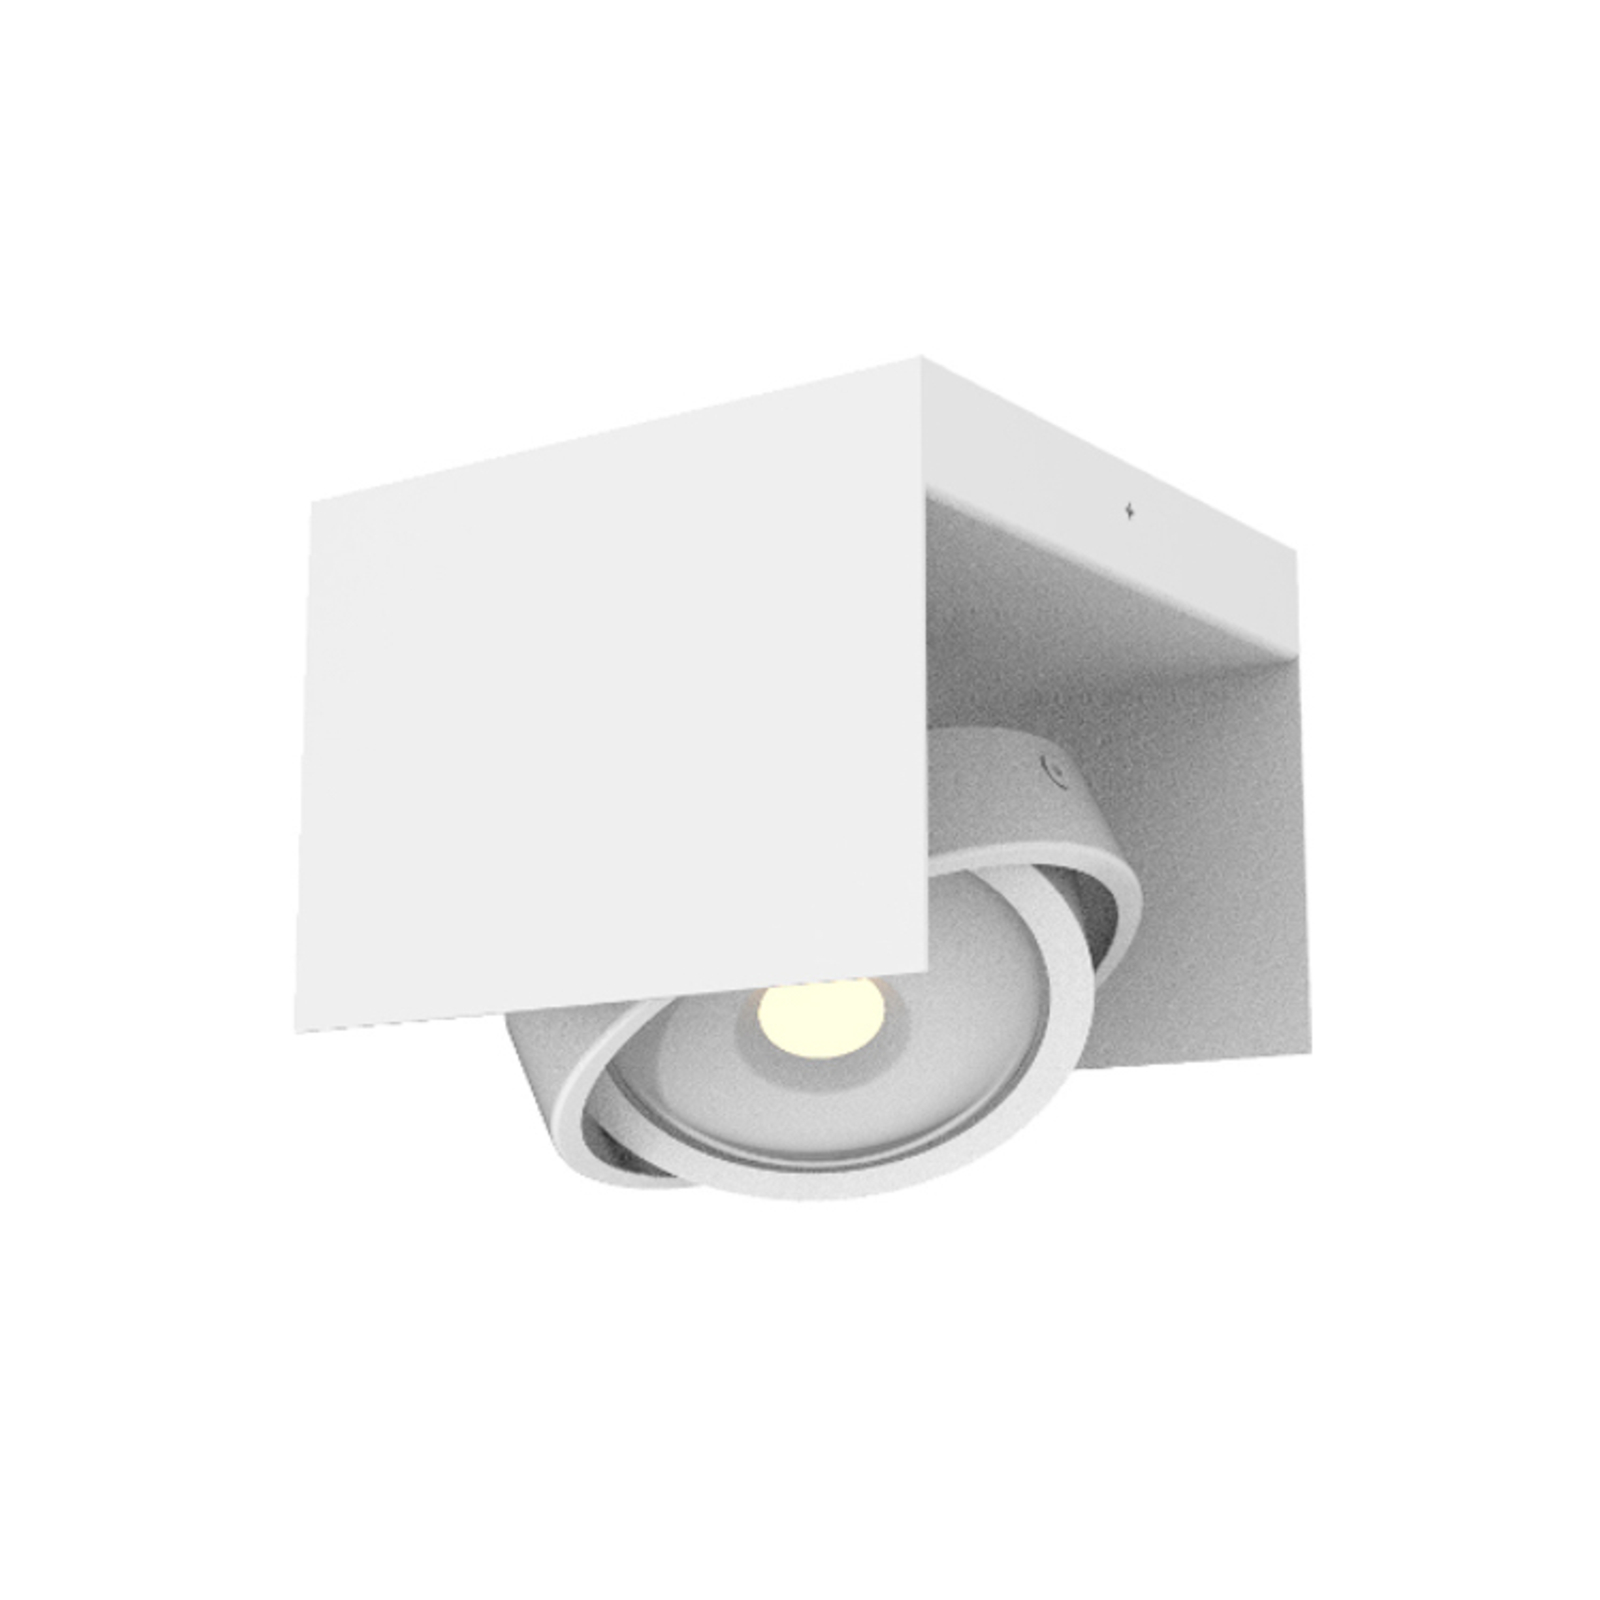 MEGATRON Cardano spot plafond LED à 1 lampe blanc